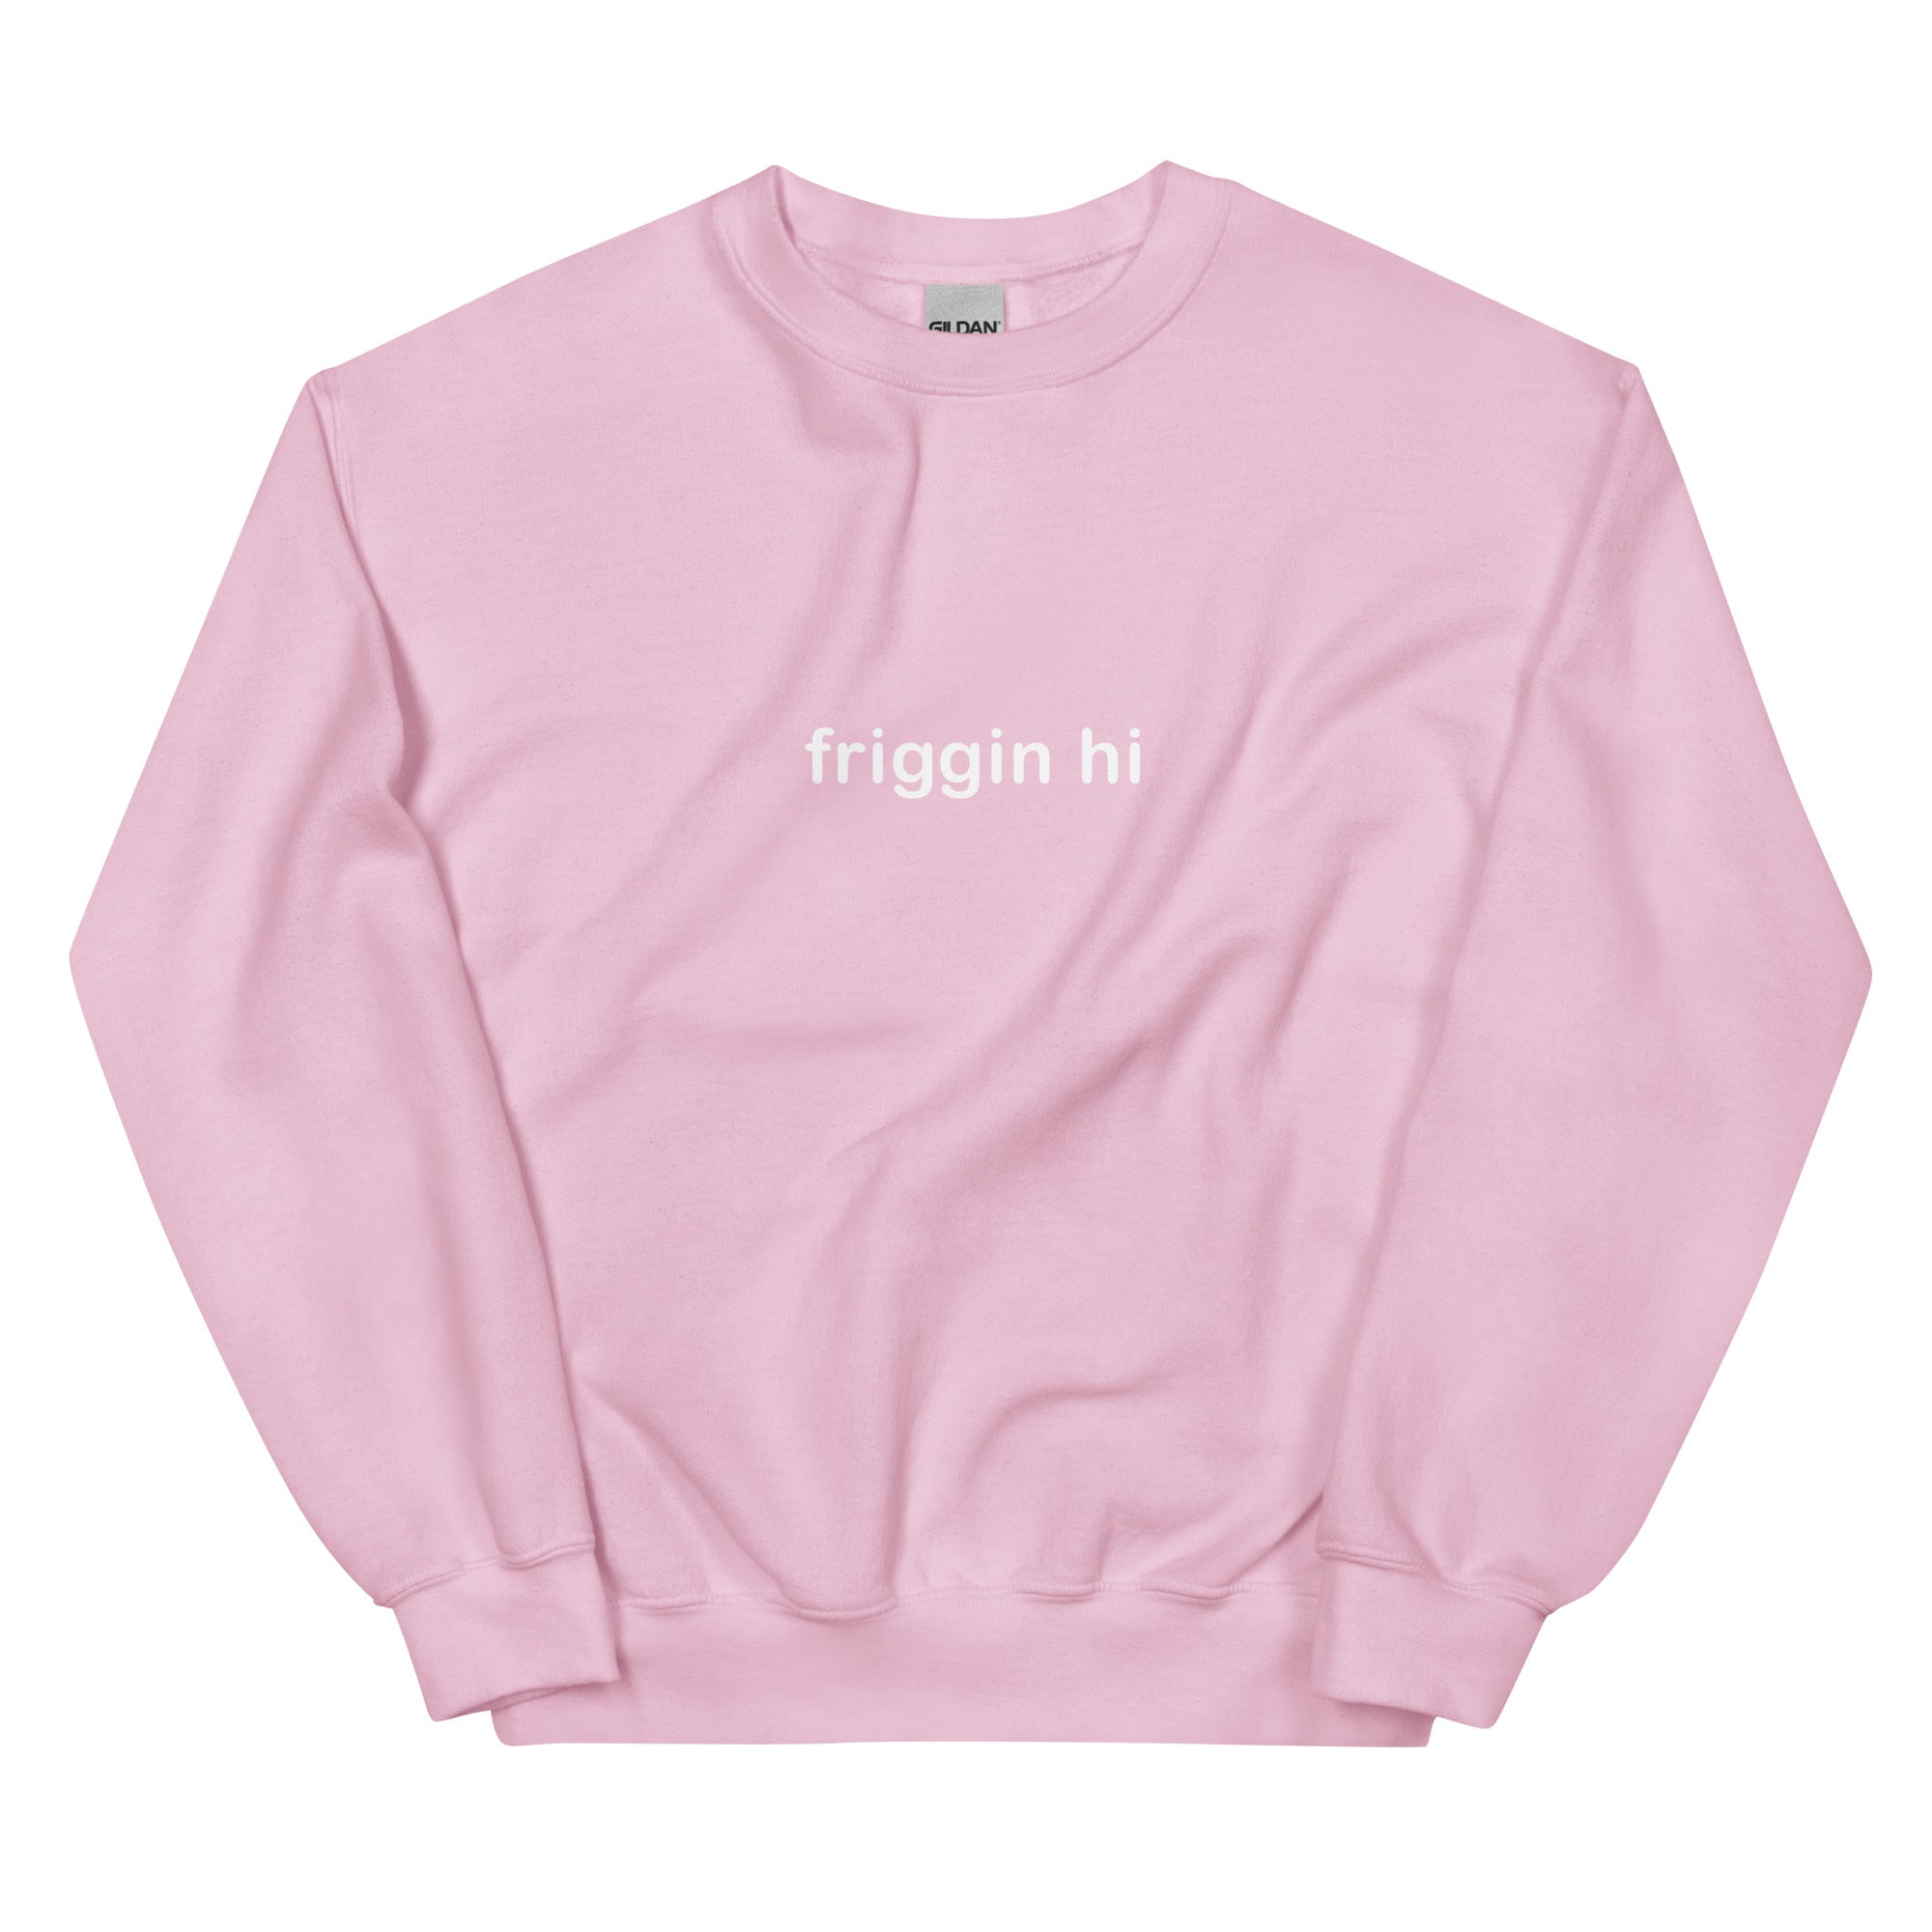 "Friggin Hi, Friggin Bye" White Text Adult Unisex Sweatshirt